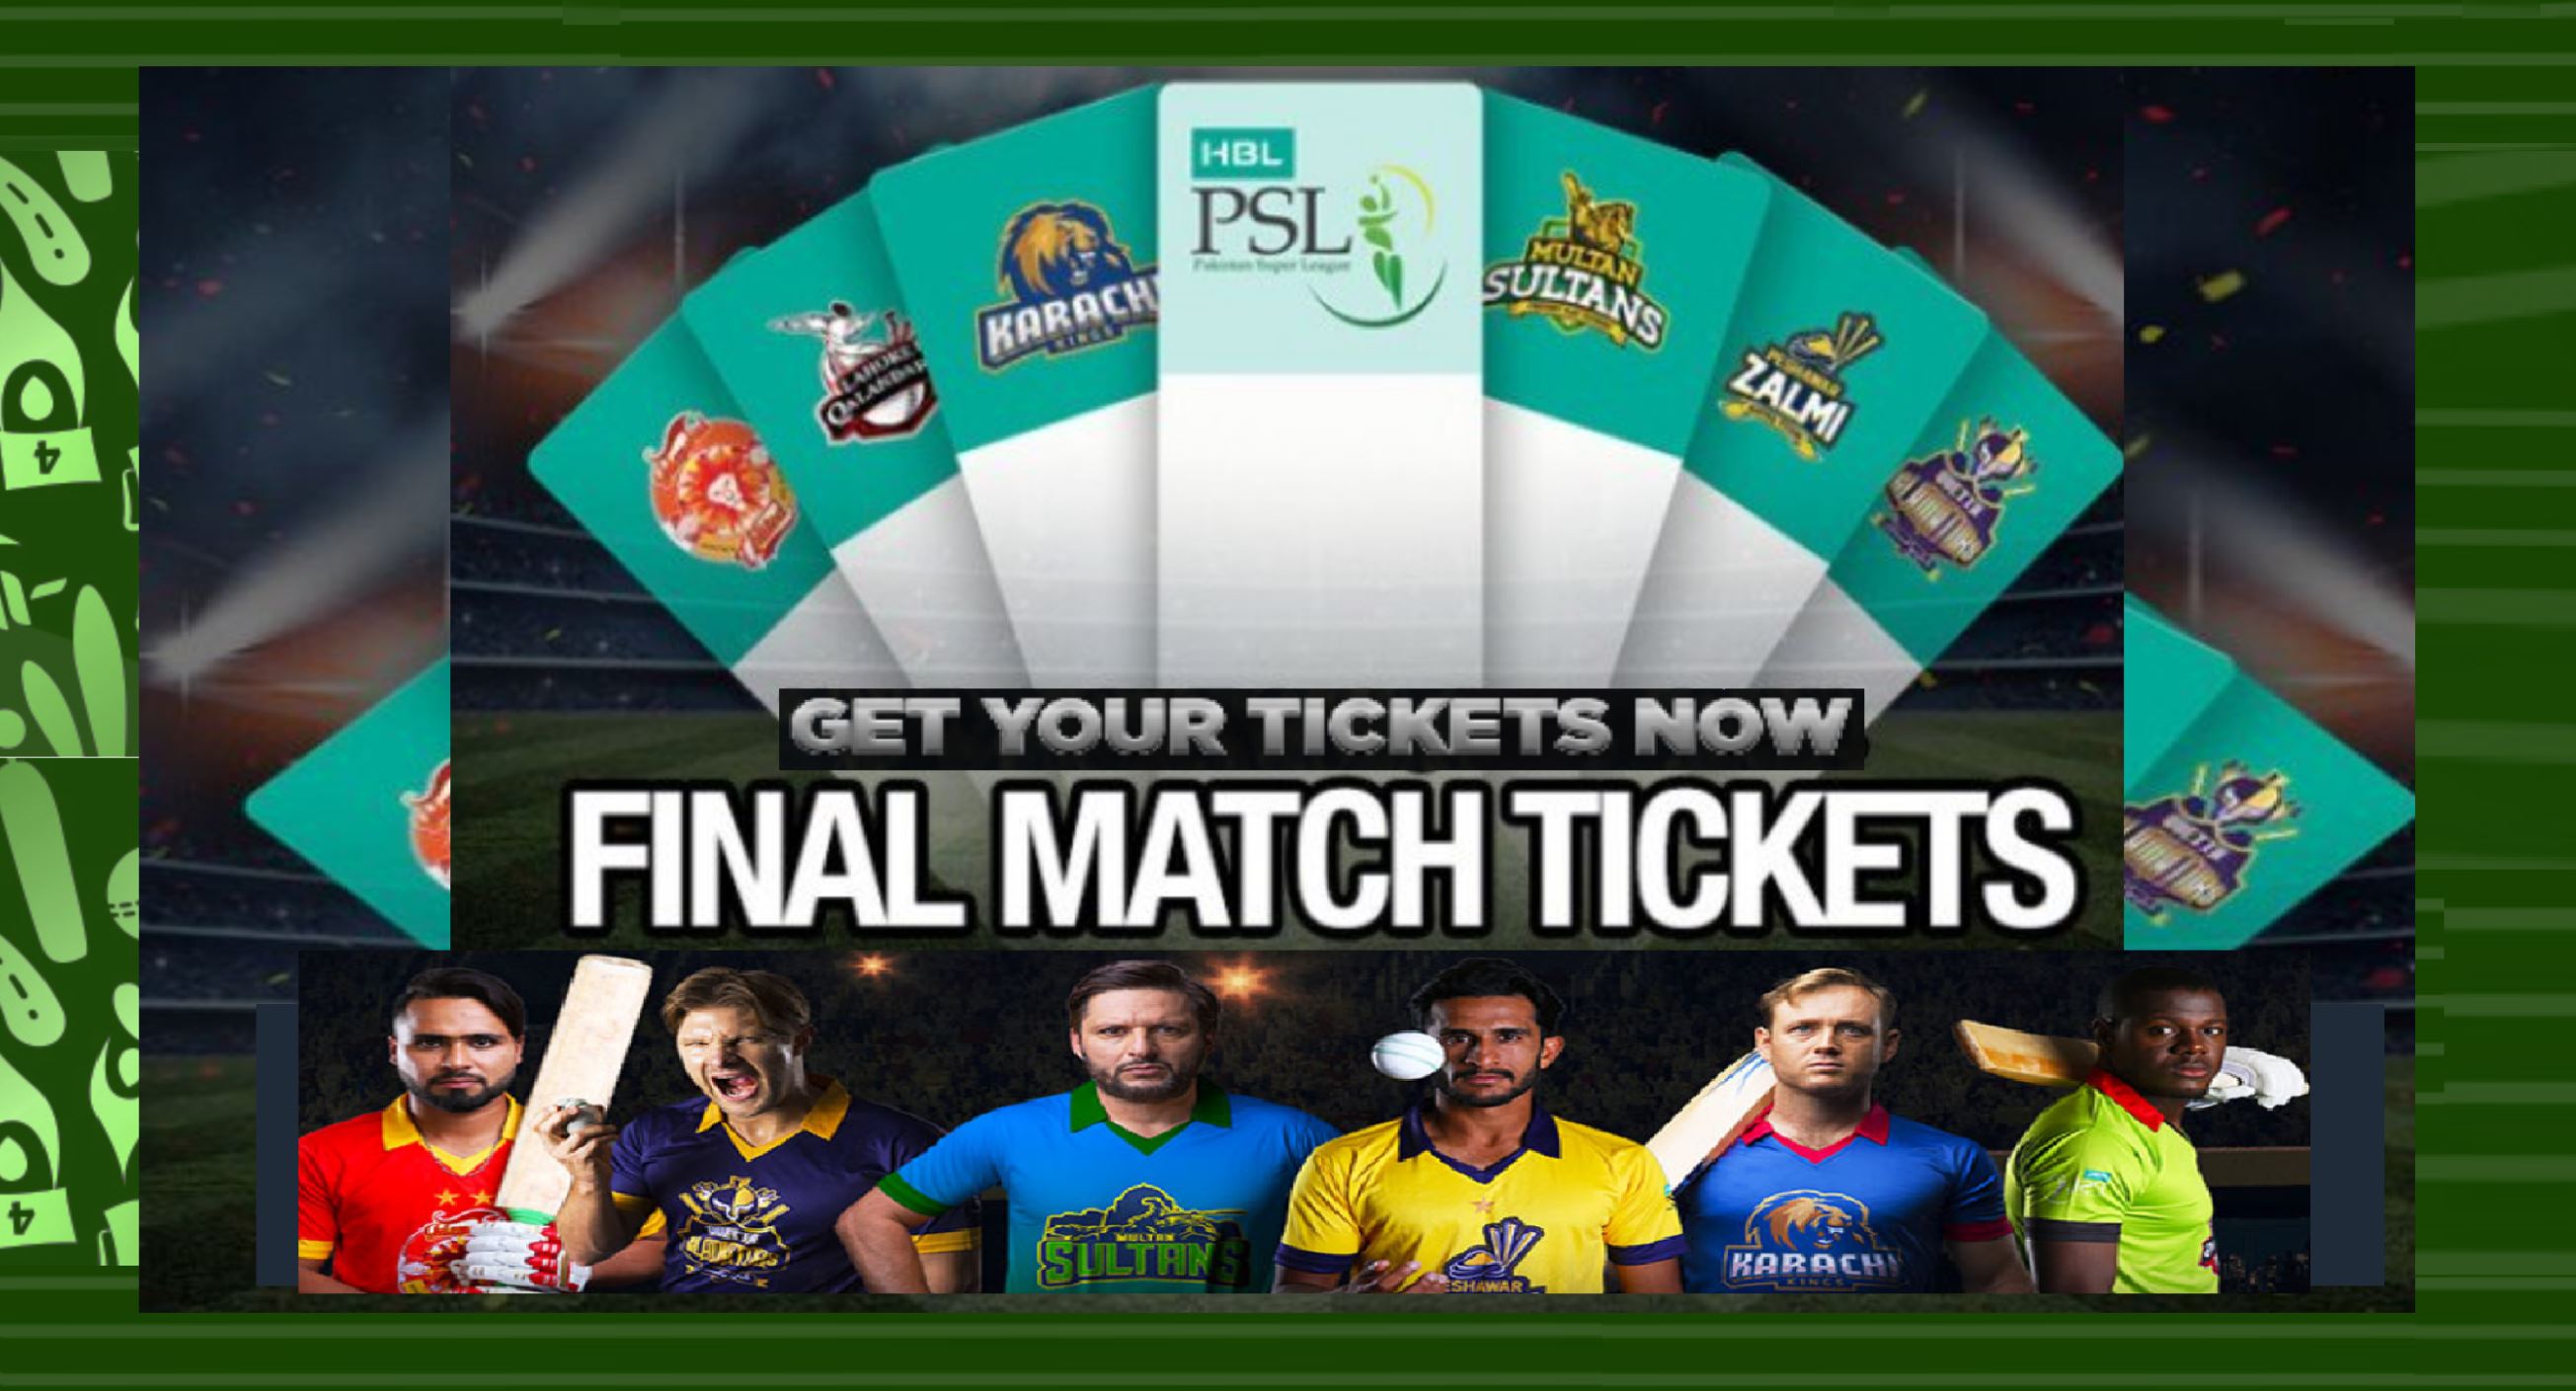 Tickets for PSL Final in Karachi